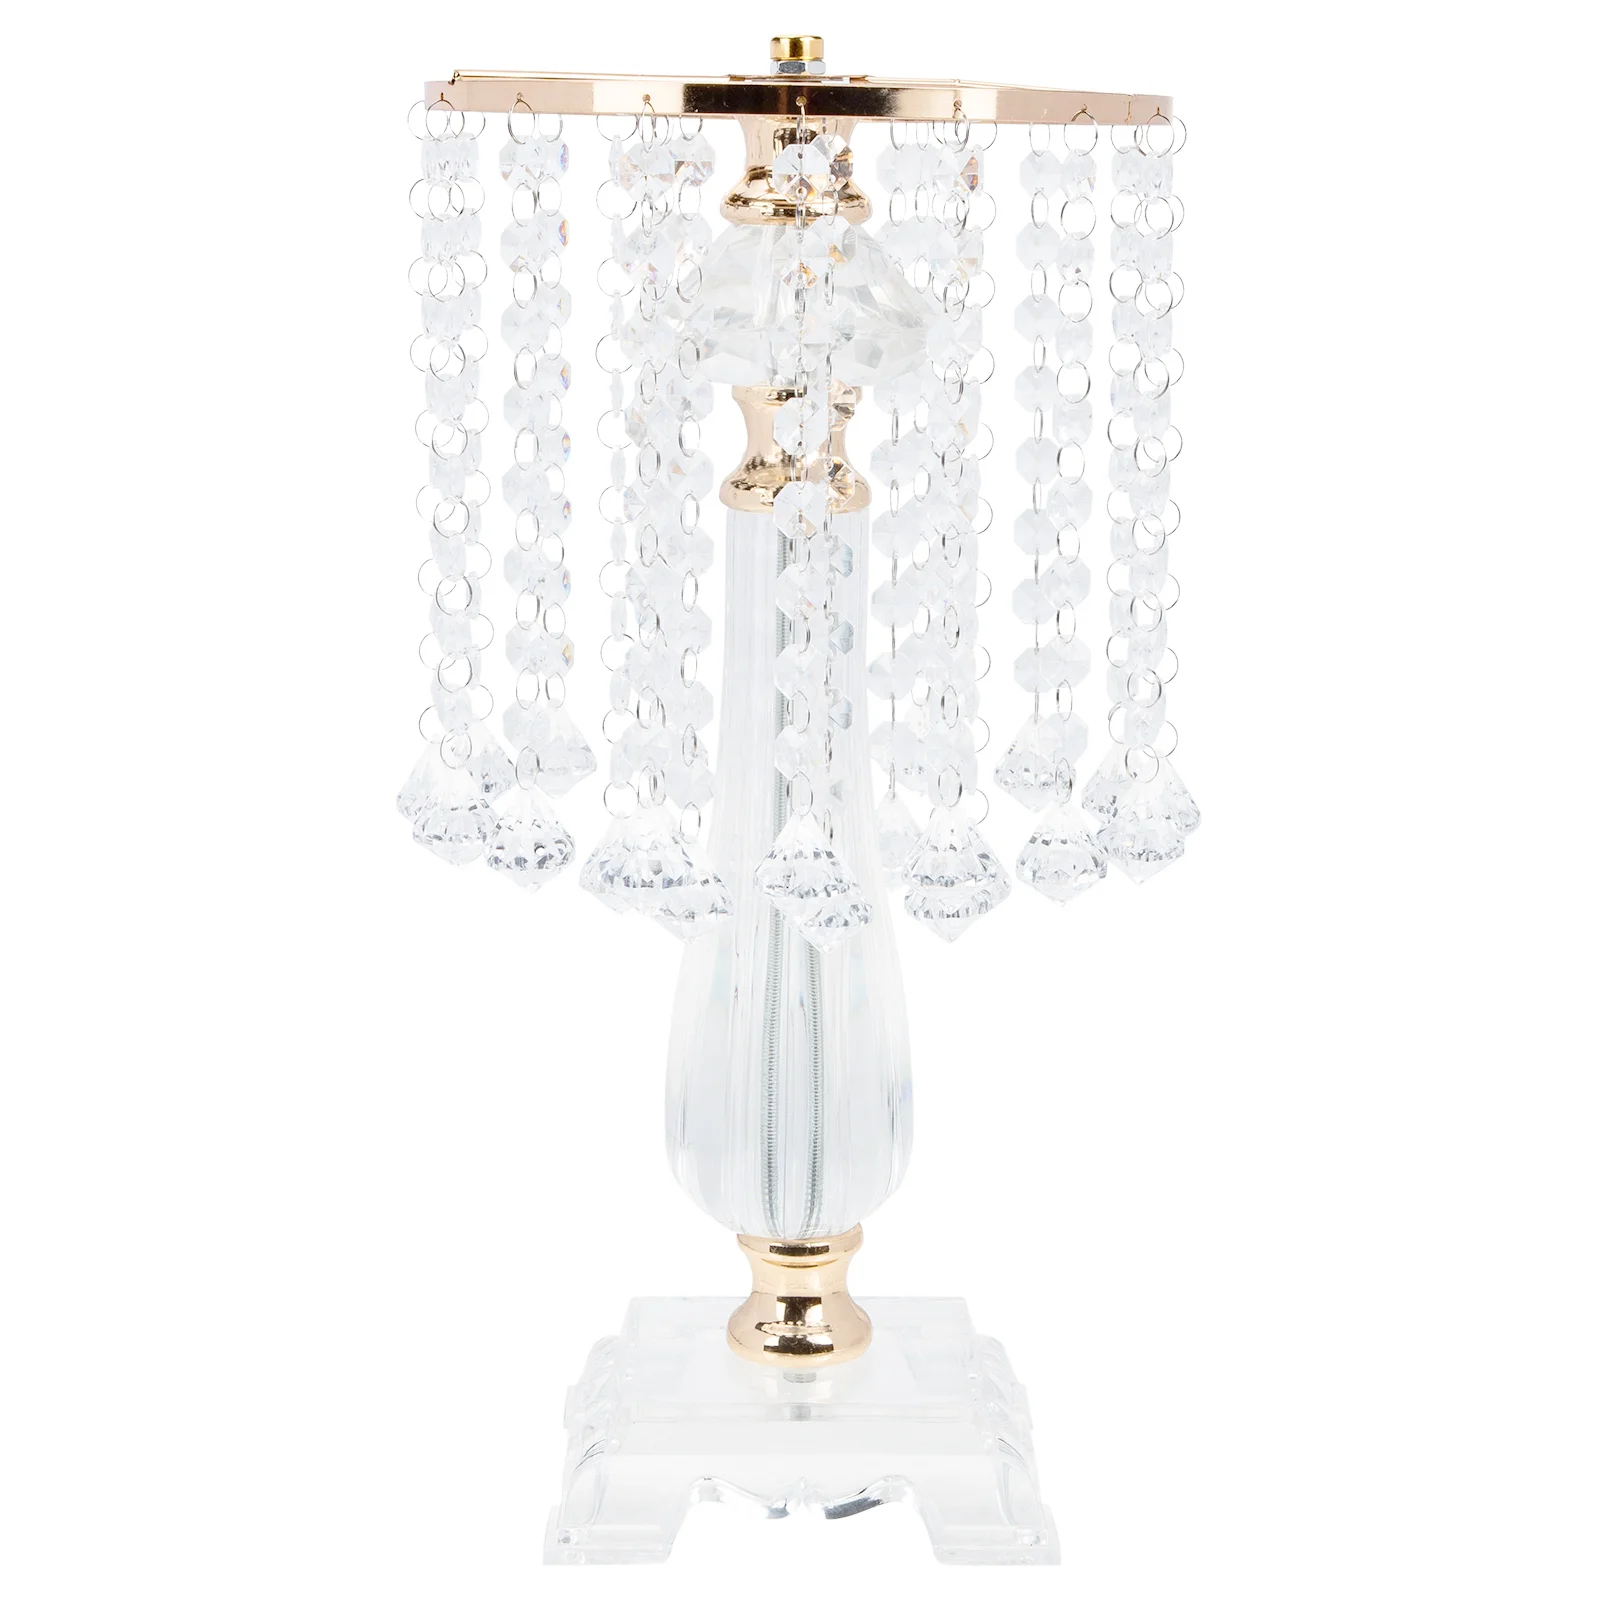 Holder Crystal Standtable Wedding Candlestick Centerpieces Holders Gold Centerpiece Flower Candelabra Taper Decorative